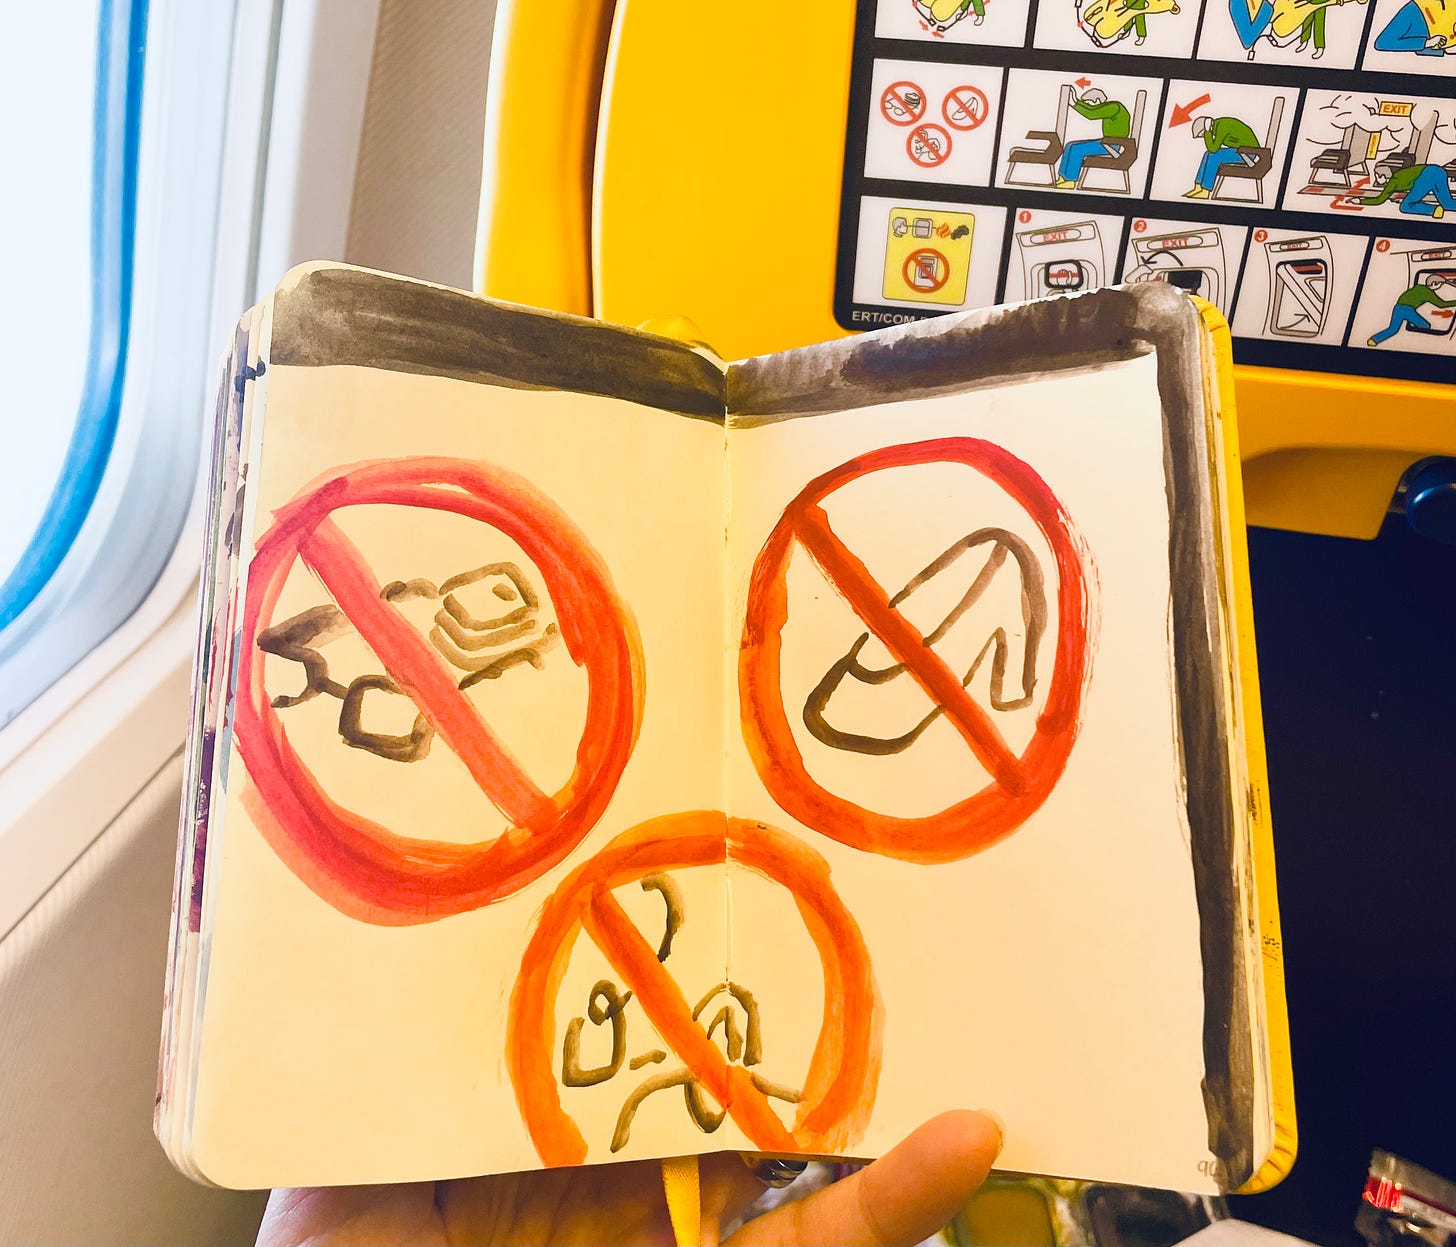 sketch of safety illustrations on plane